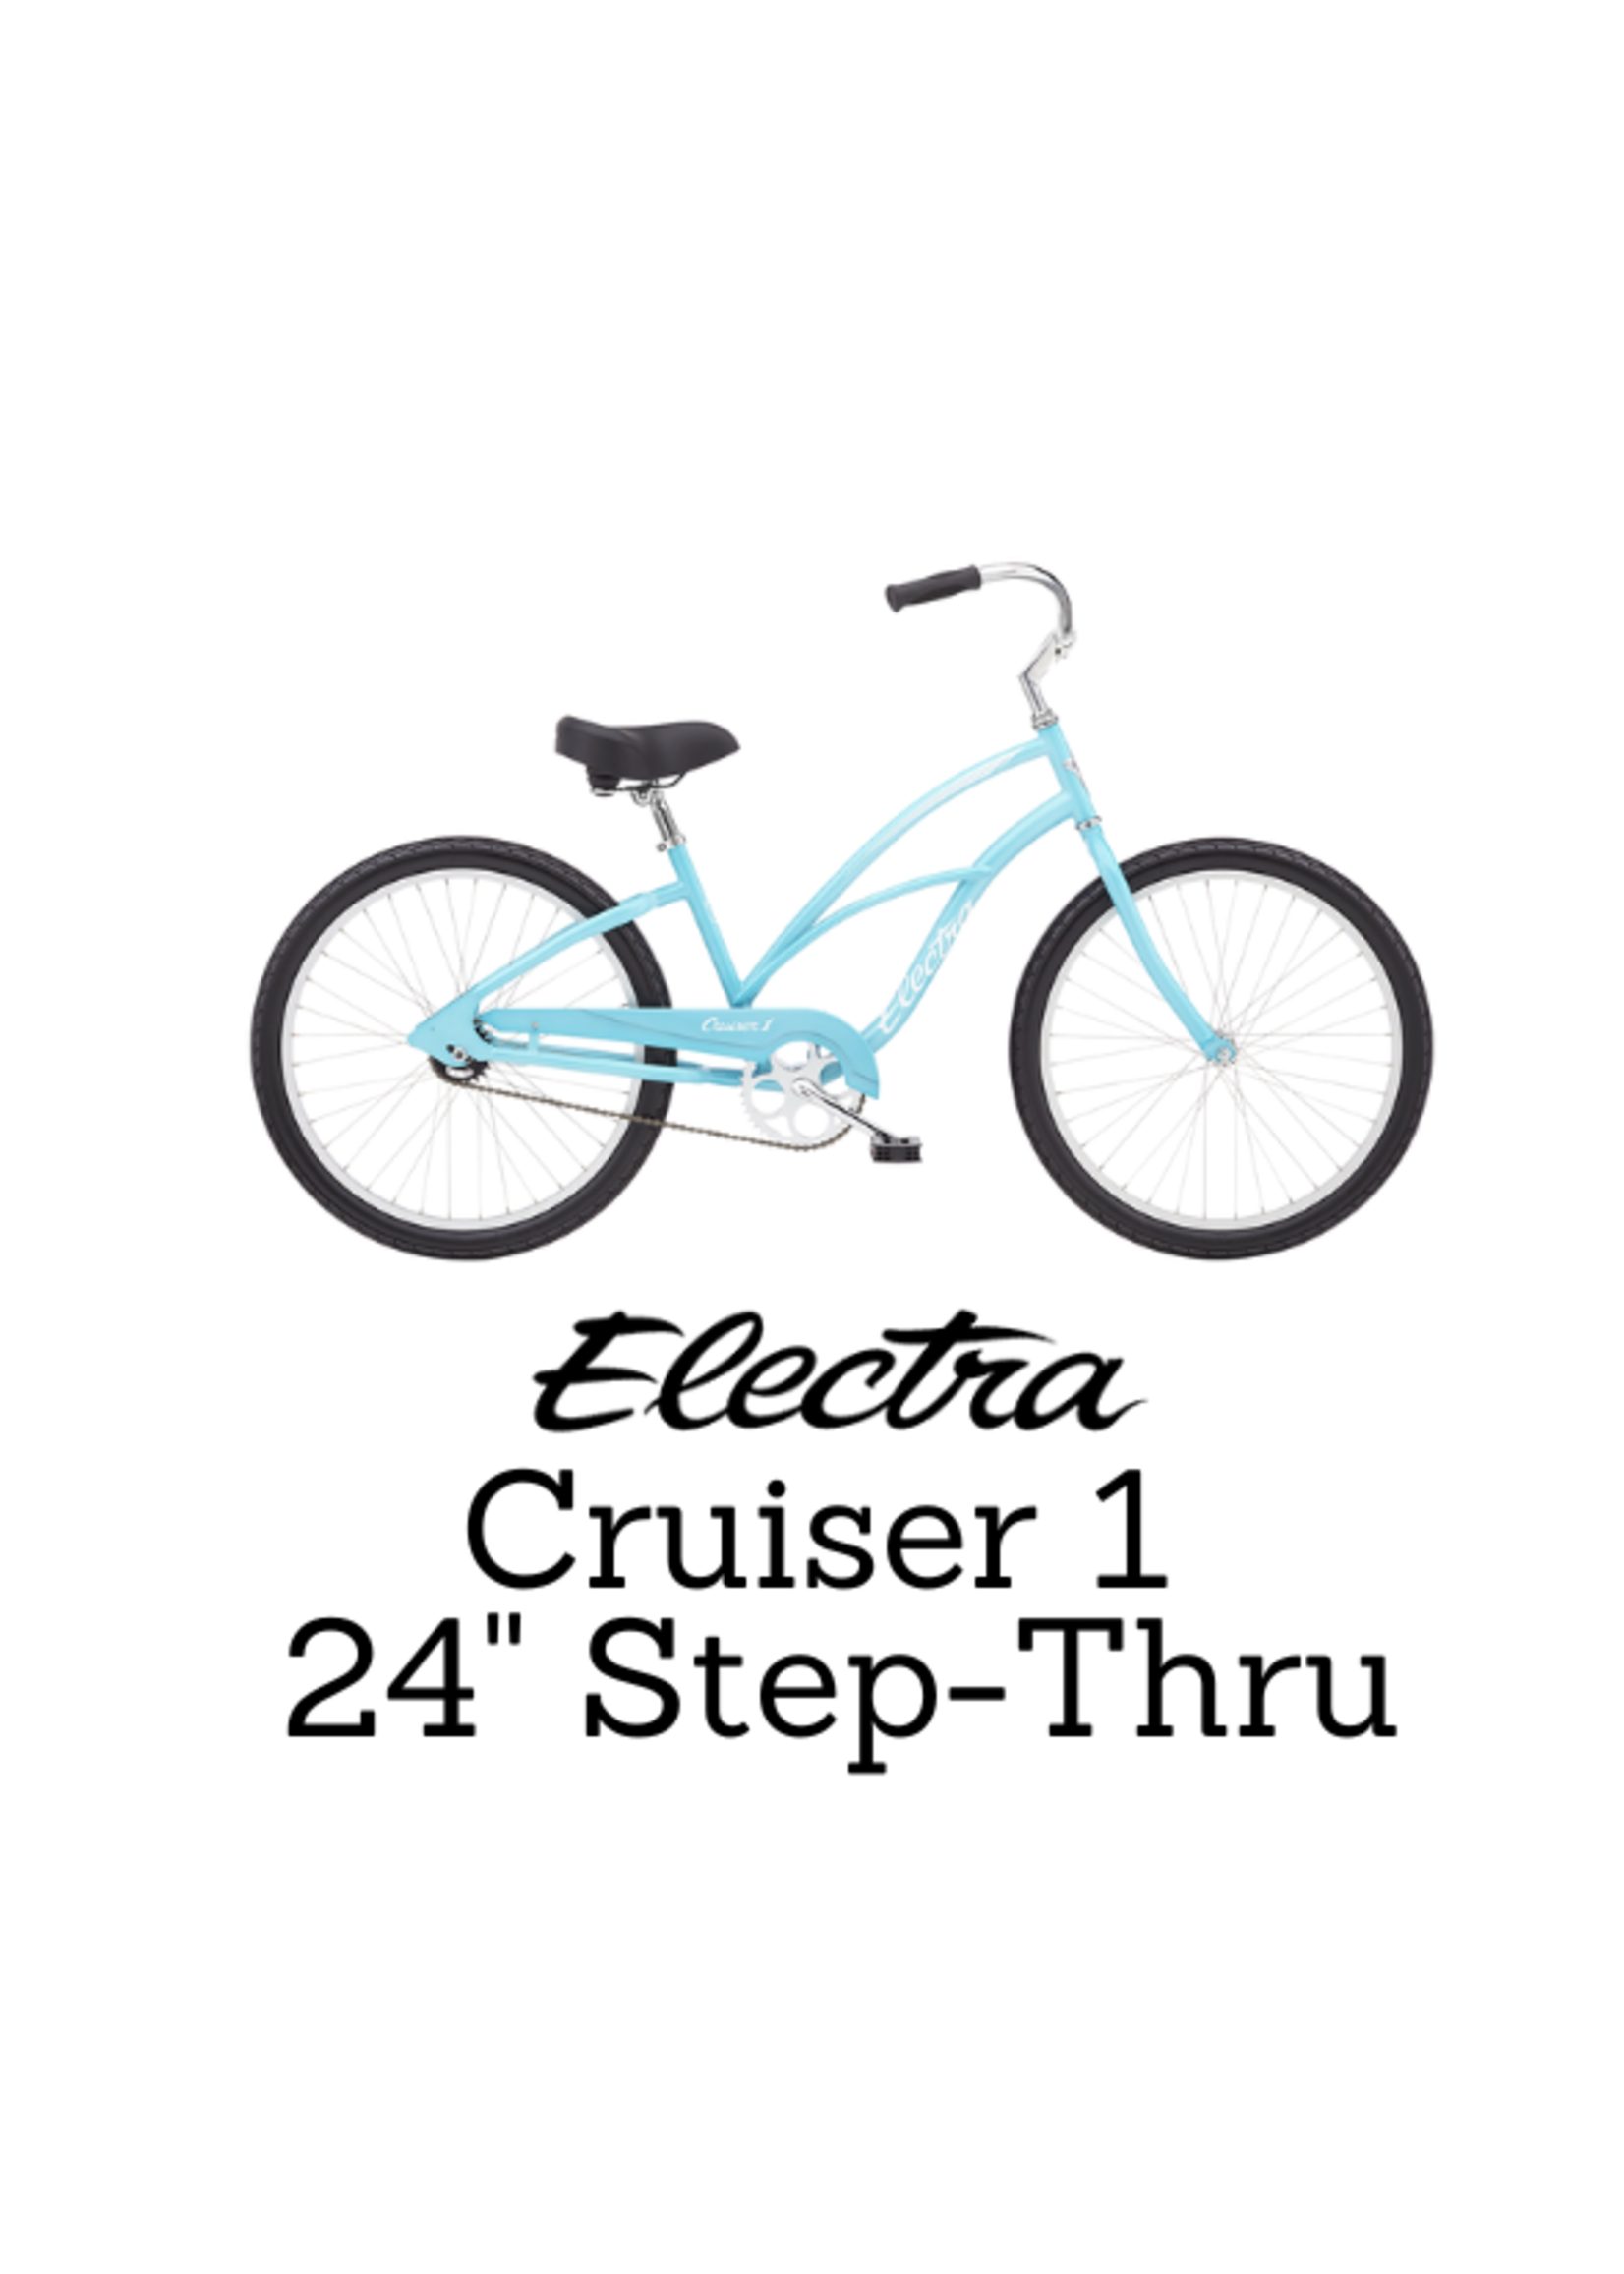 Electra Electra Cruiser 1 24" Step-Thru